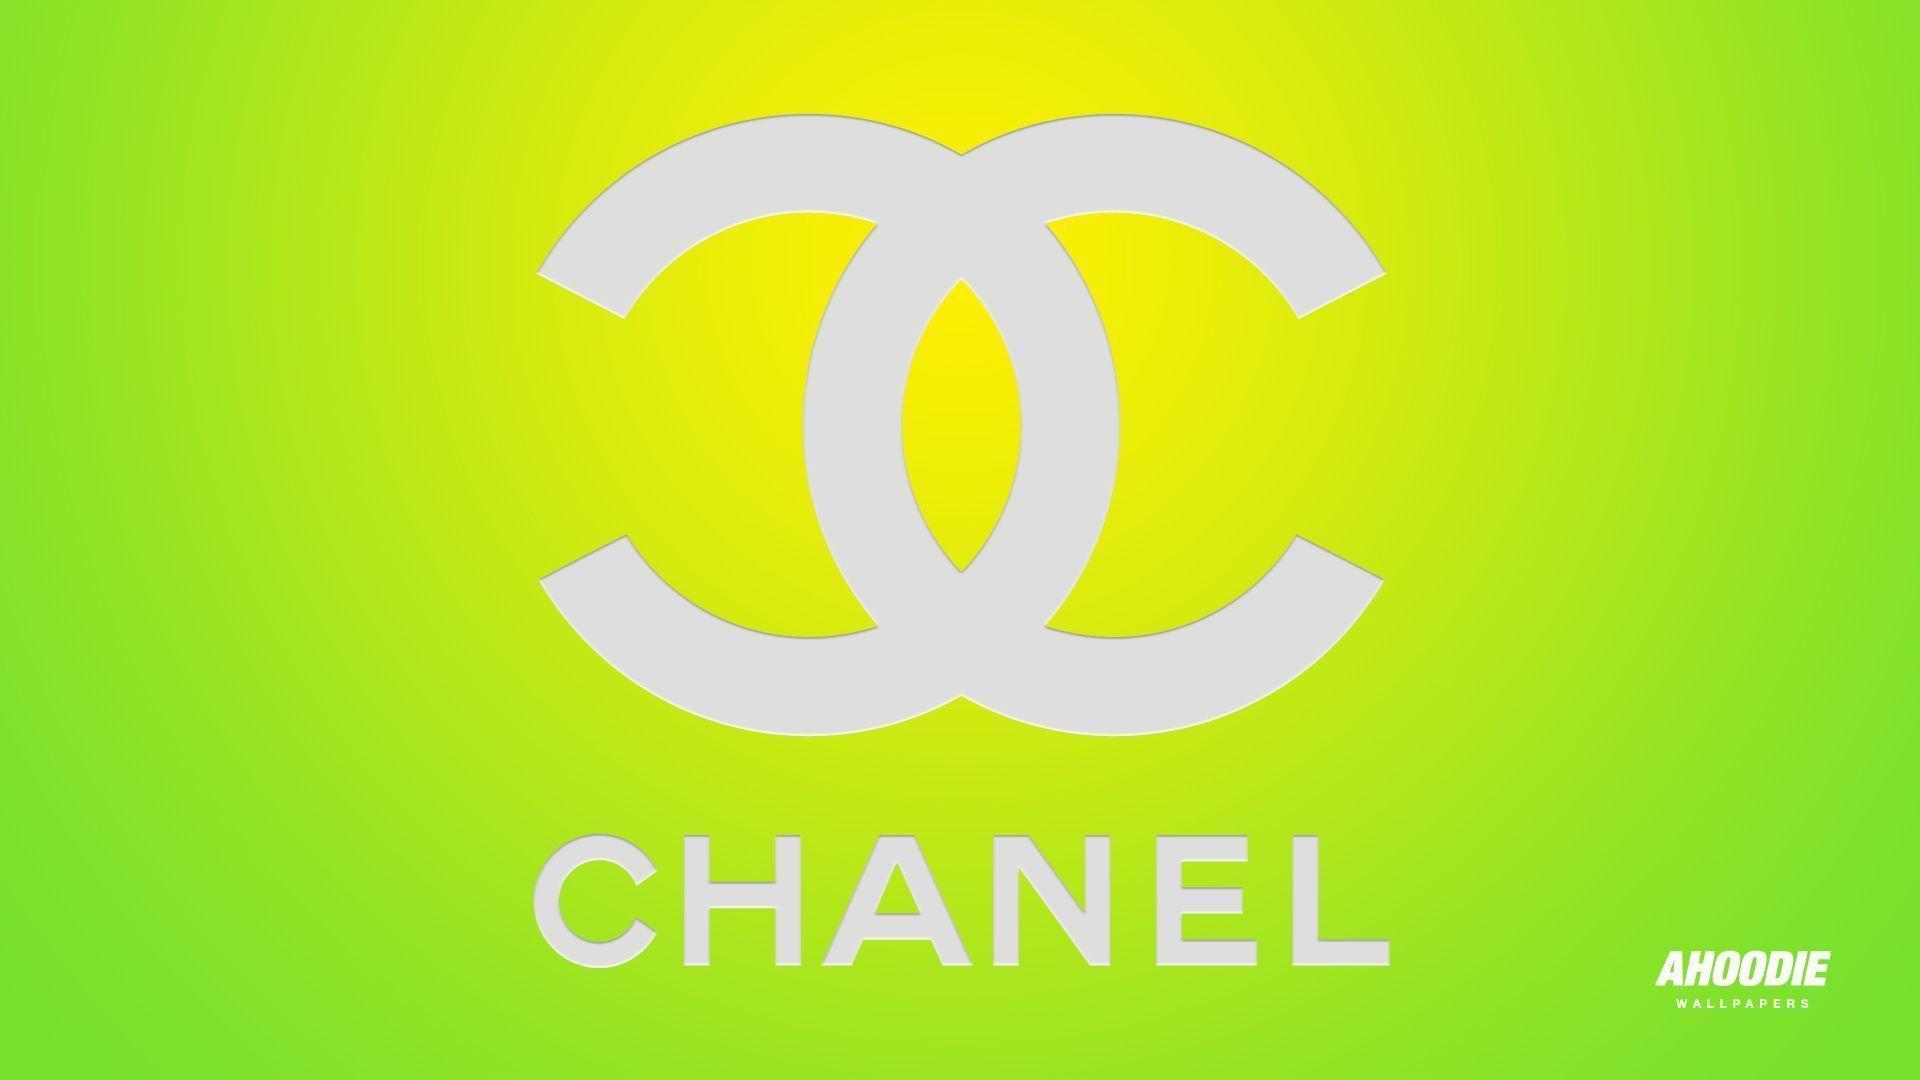 Logos For > Channel Fashion Logo Wallpaper